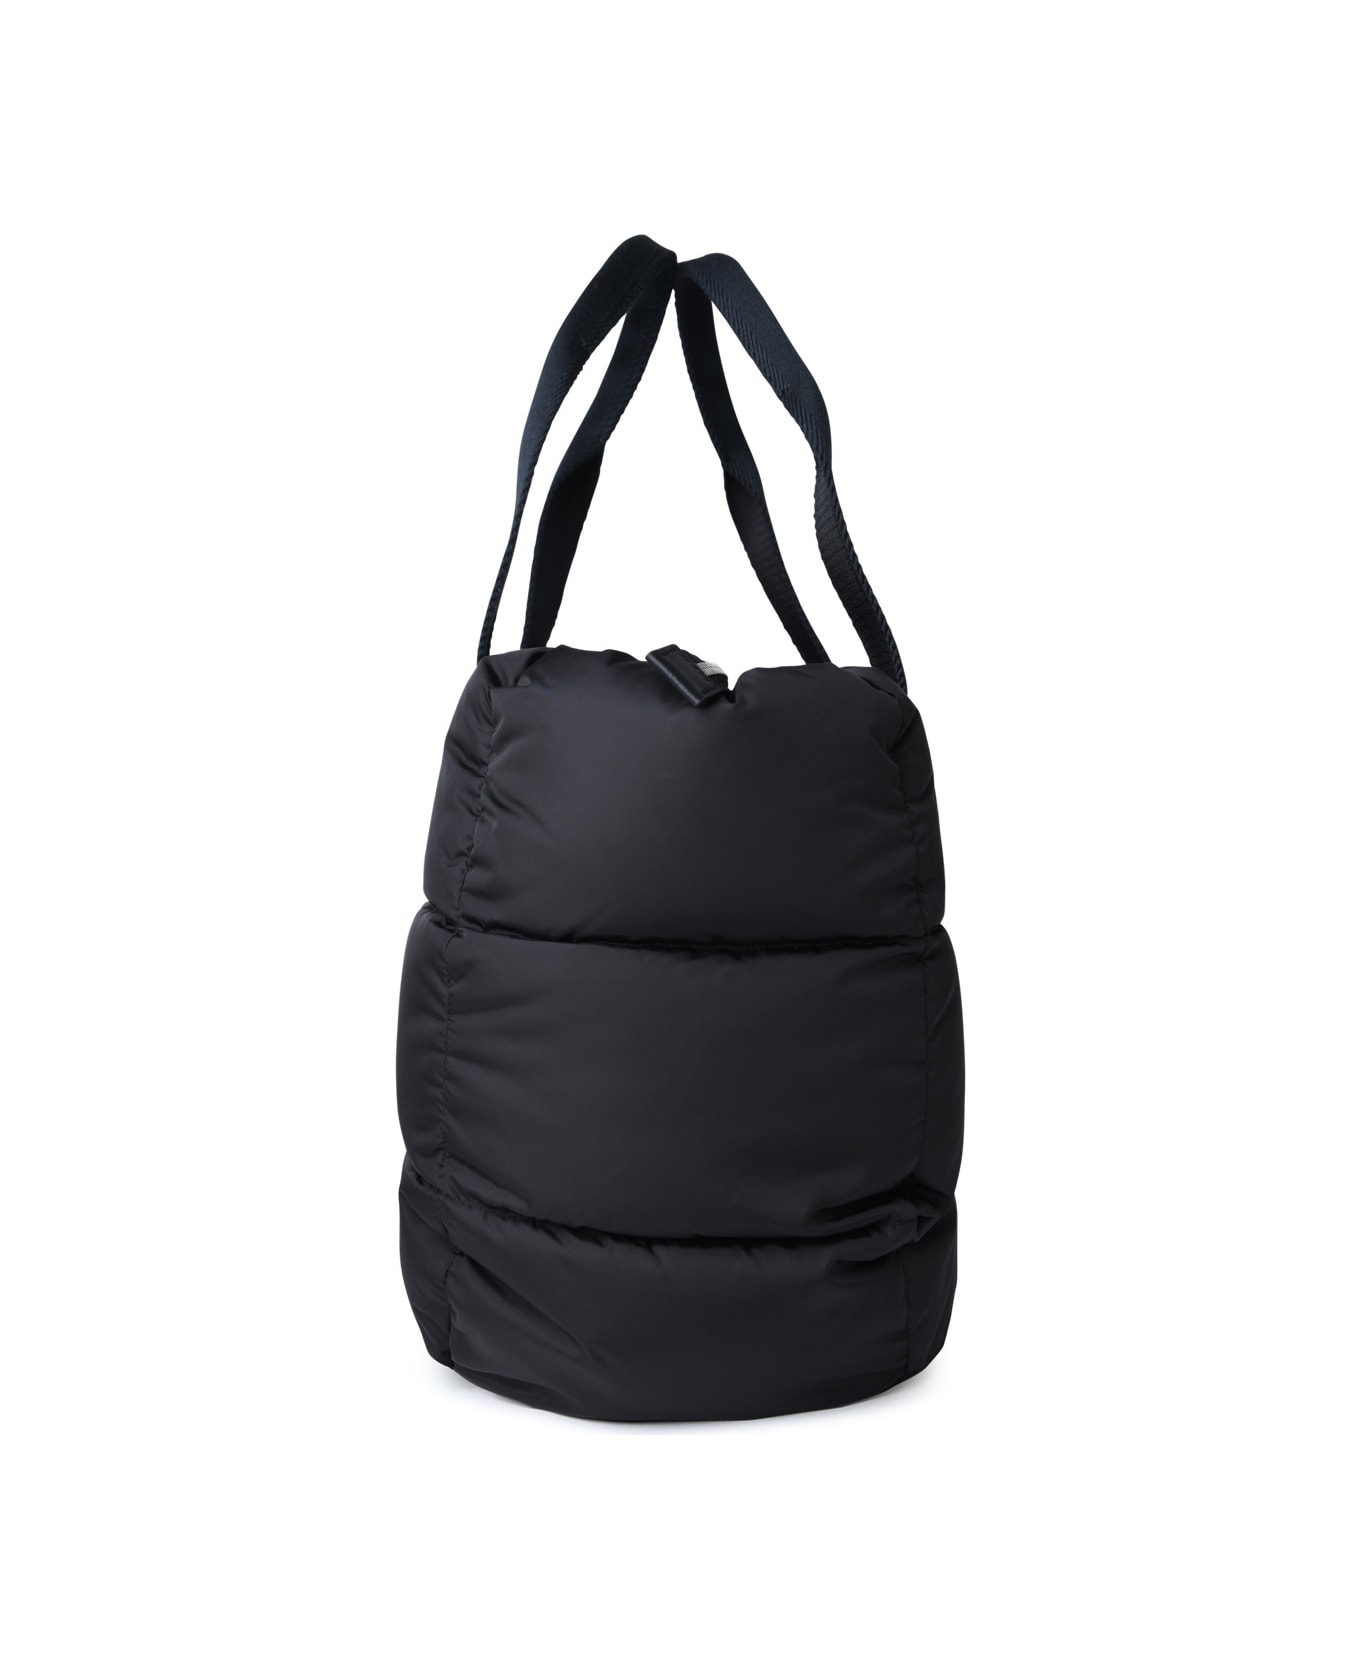 Moncler 'caradoc' Black Nylon Bag - Nero トートバッグ